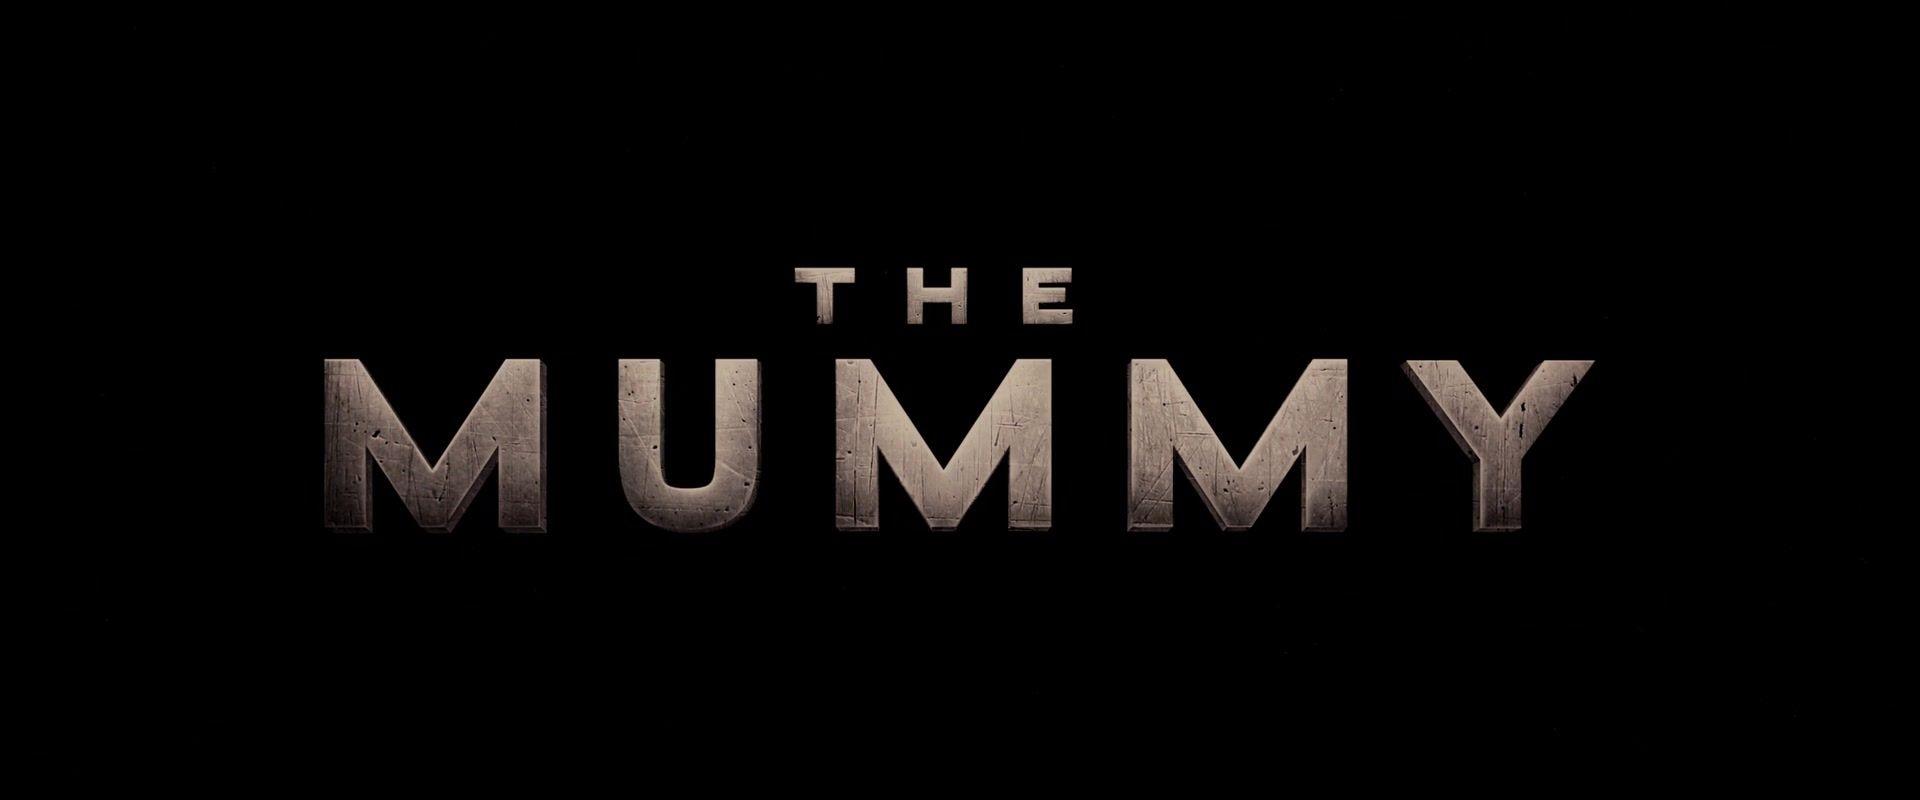 Mummy Movie Logo - Image - The Mummy (2017) Logo.jpg | Film and Television Wikia ...